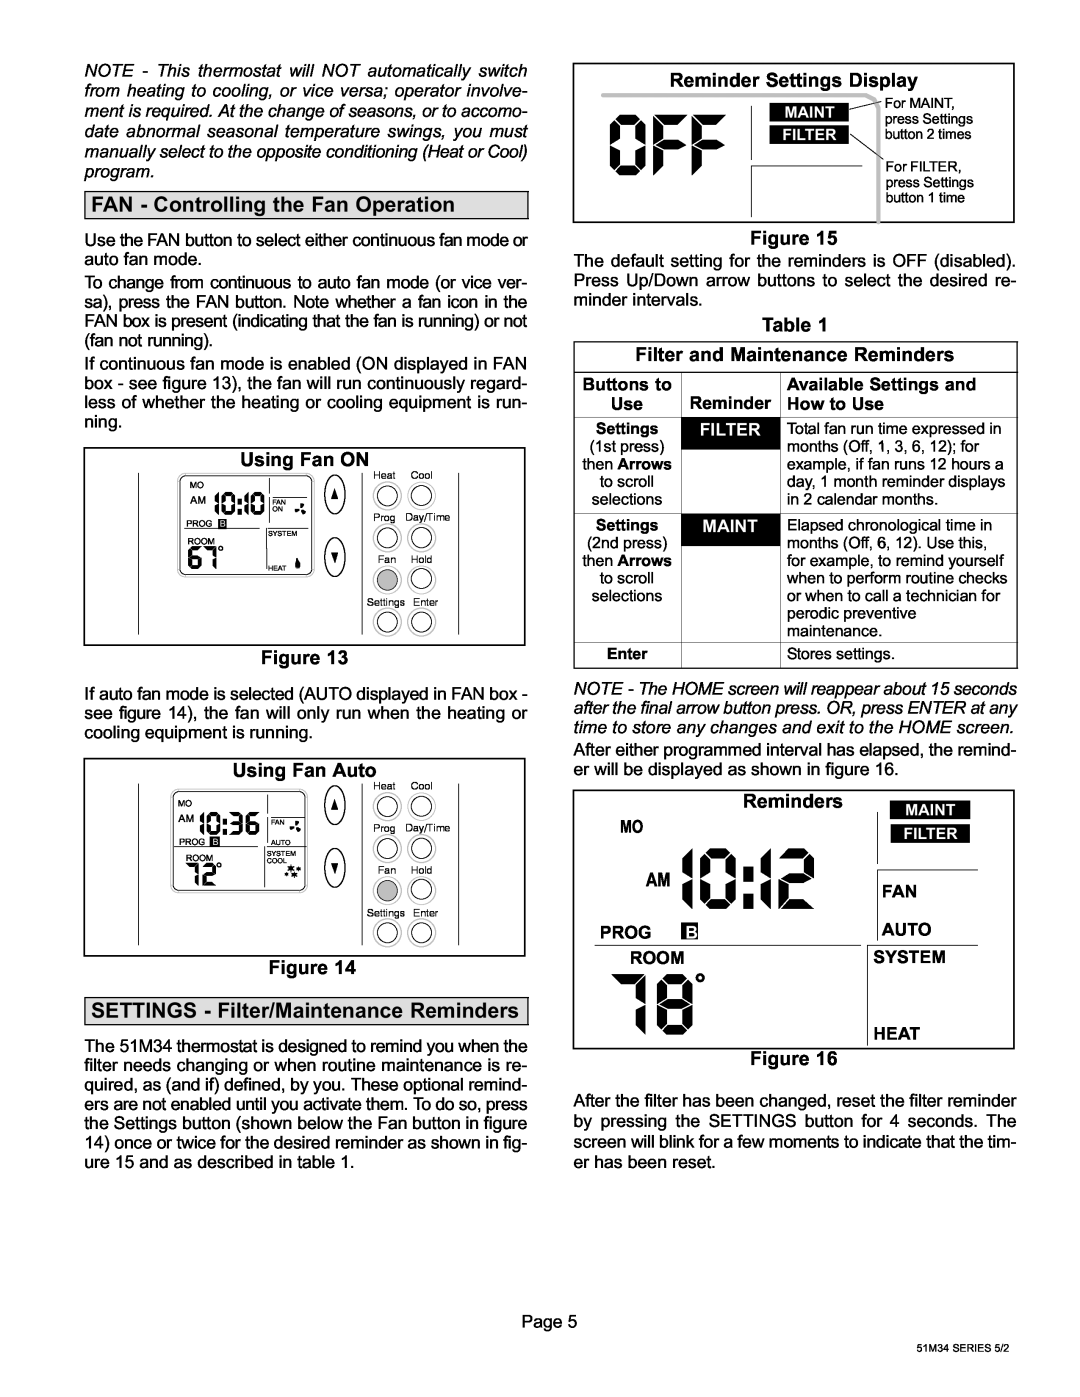 Lennox International Inc 51M37 operation manual Pm, PM I0 36 FAN, FAN − Controlling the Fan Operation, Reminders 